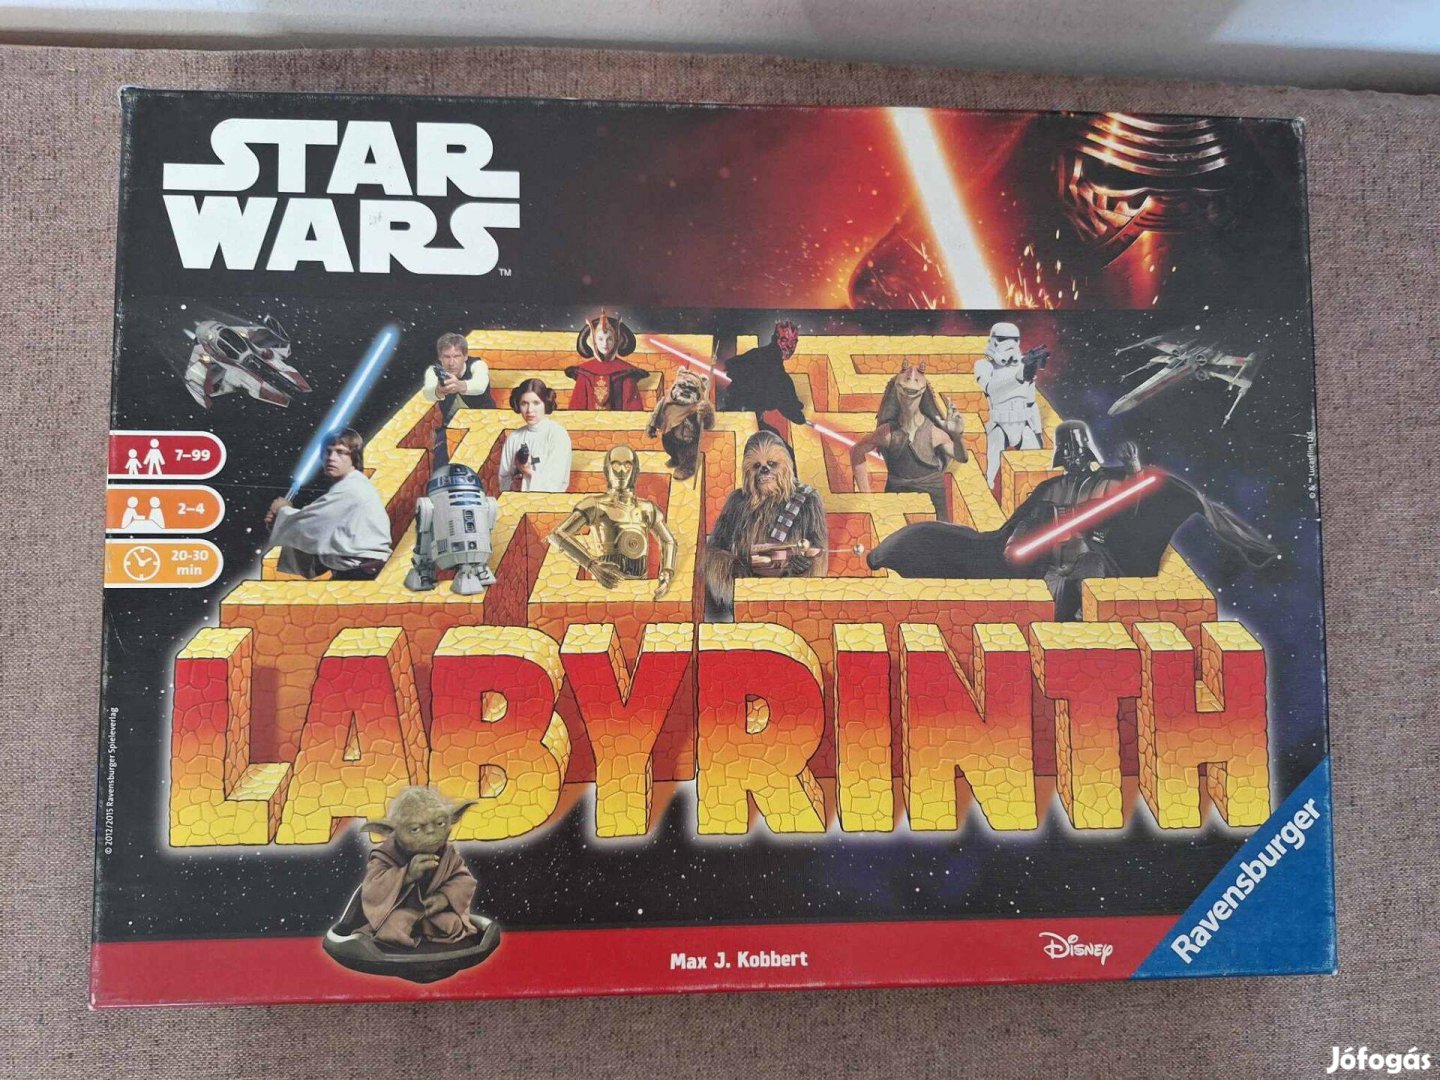 Star Wars Labirintus társasjáték